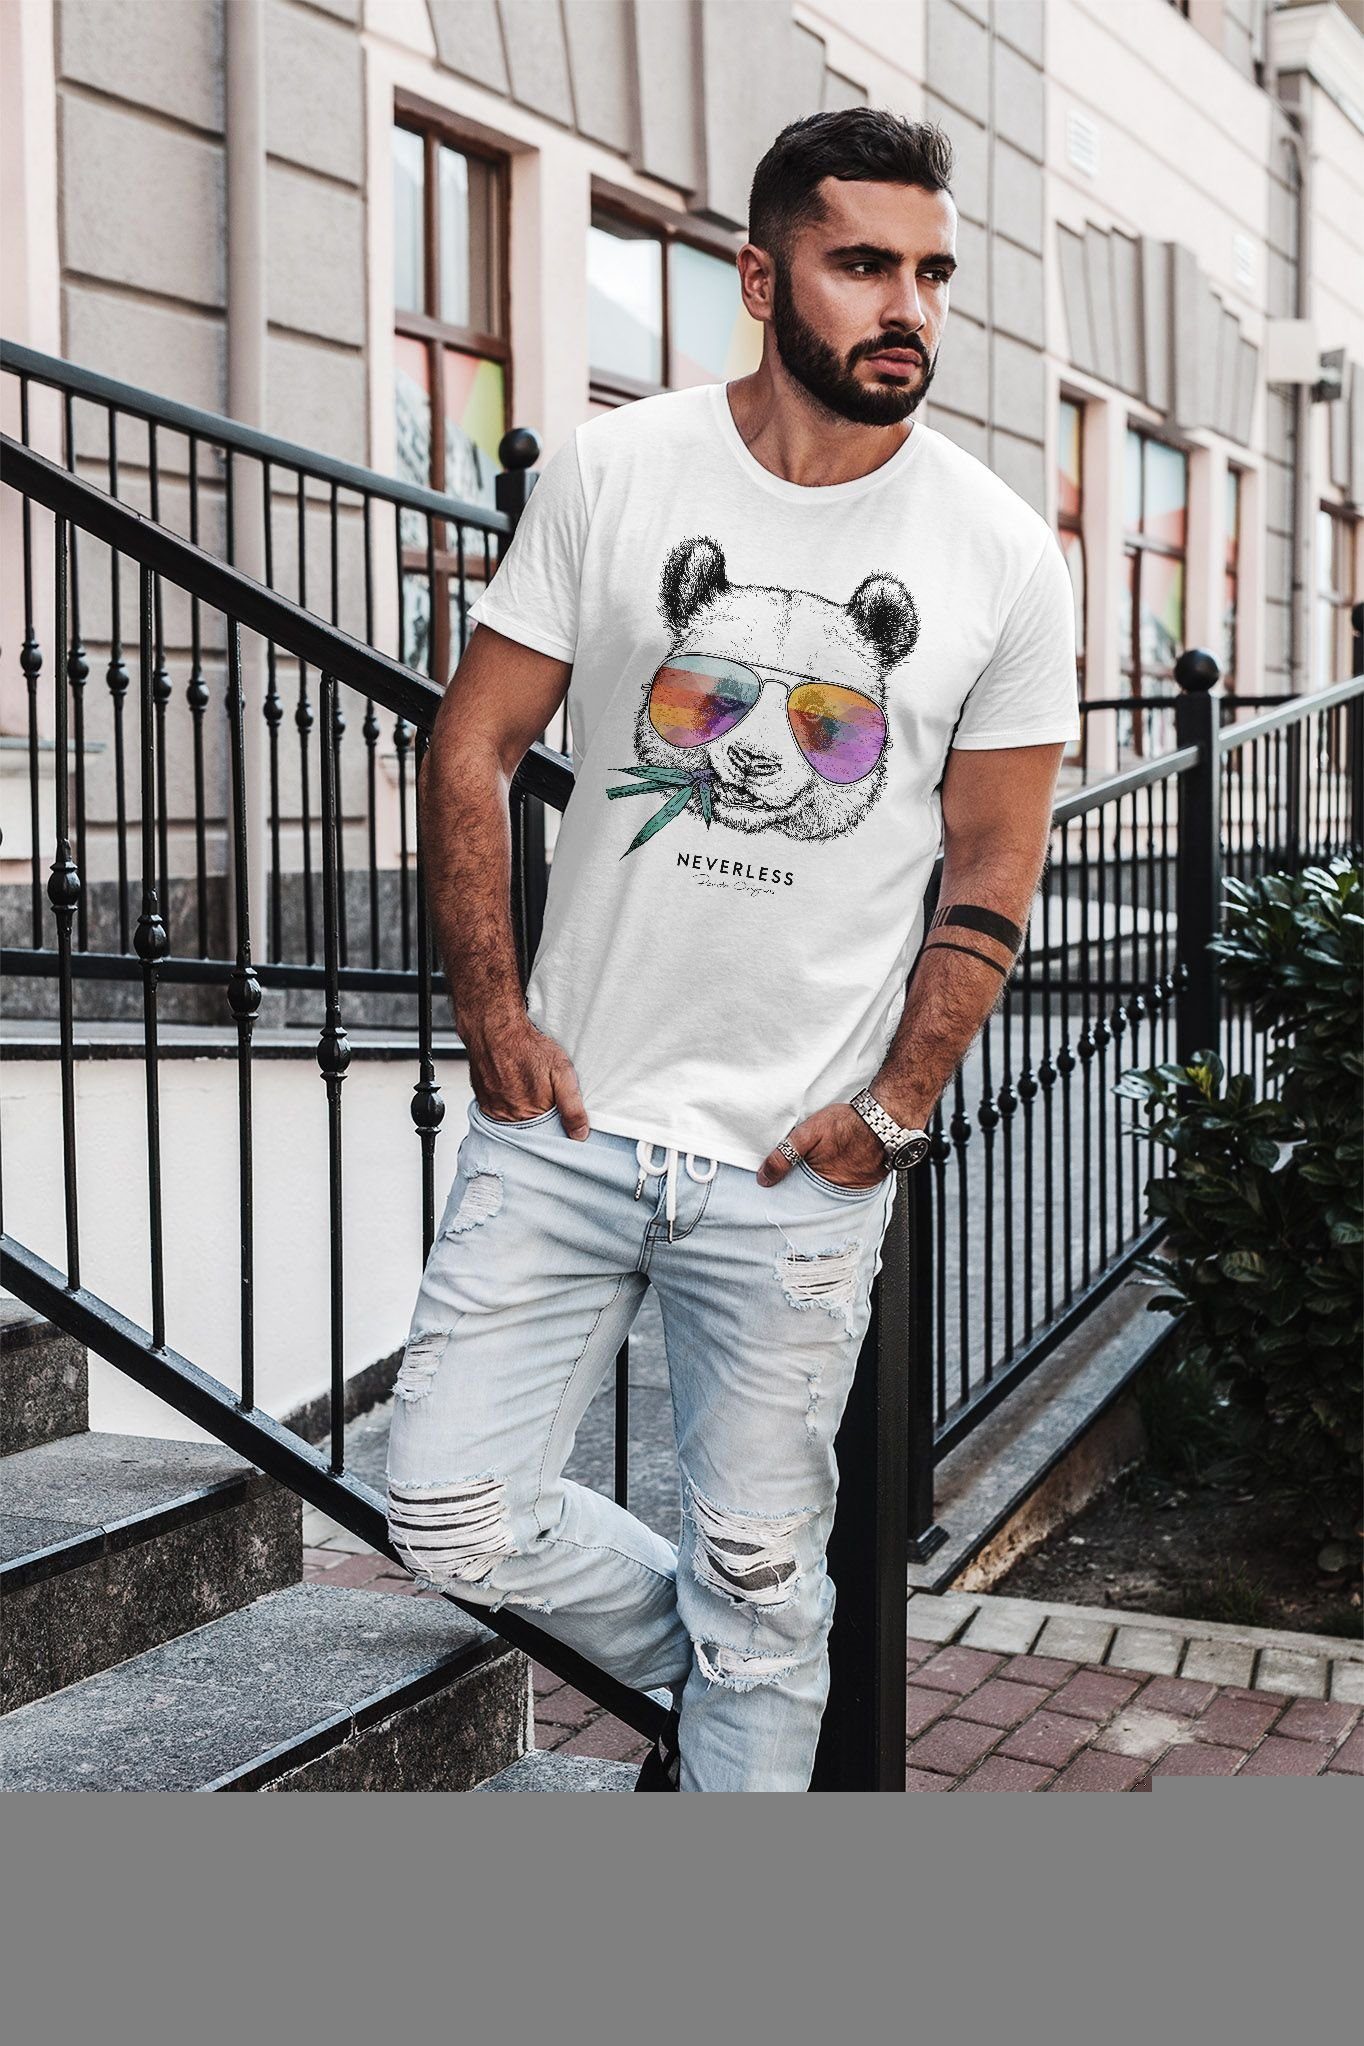 Panda Print Bär Streetstyle Print-Shirt T-Shirt Neverless Herren Fashion Sonnenbrille mit Neverless® Aufdruck Tiermotiv mit